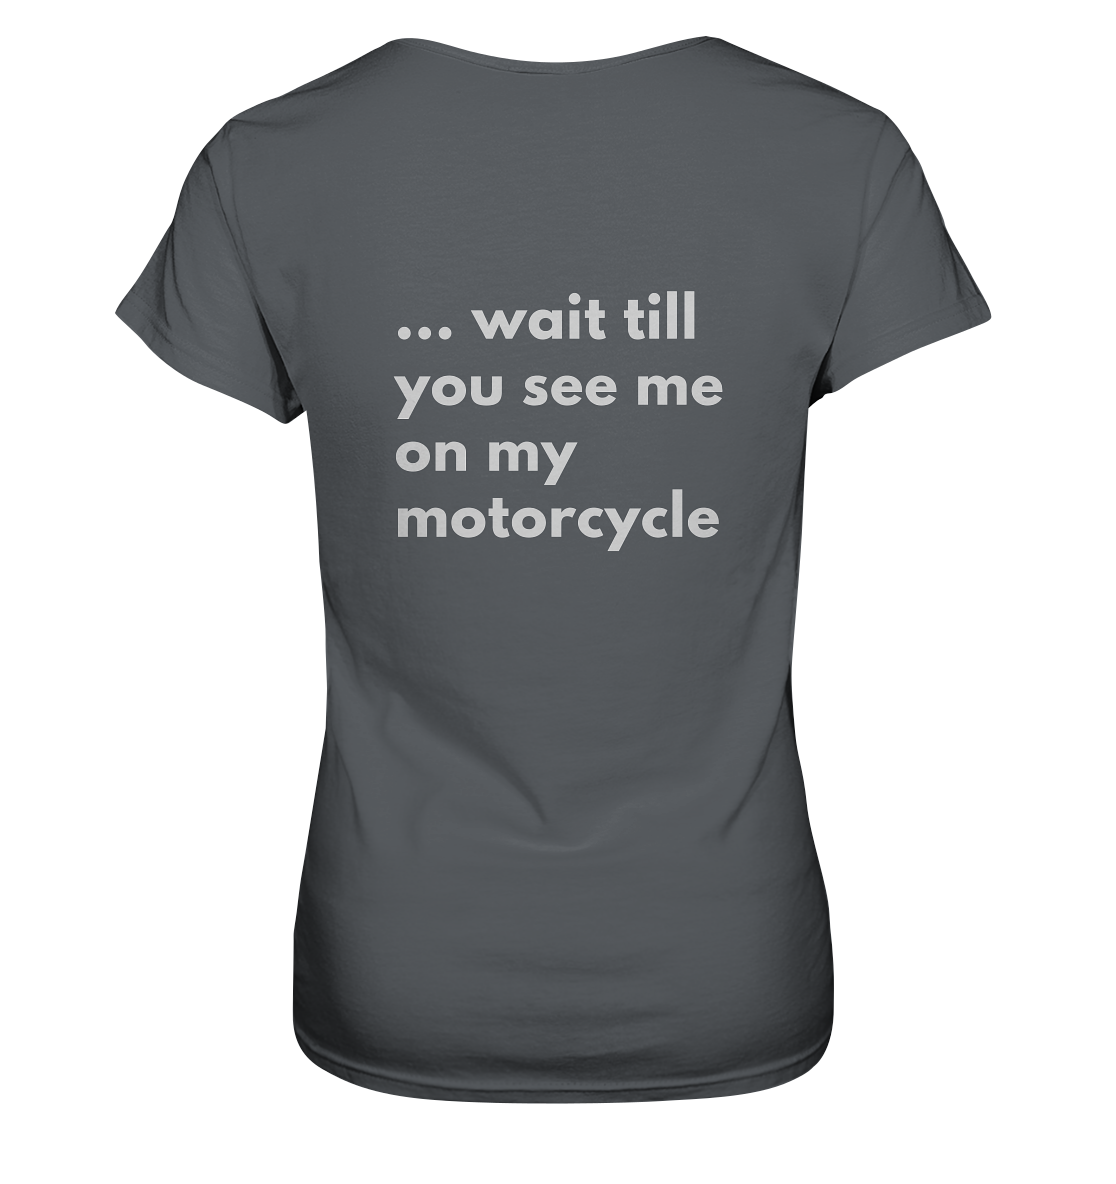 Damen-Motorrad-T-Shirt / Ladies Motorcycle Shirt, white funny print front _ mit witzigem weißem Aufdruck vorn: "If you think I'm sexy now ...", hinten / back: "... wait till you see me on my motorcycle", Rundhals, grau/ grey